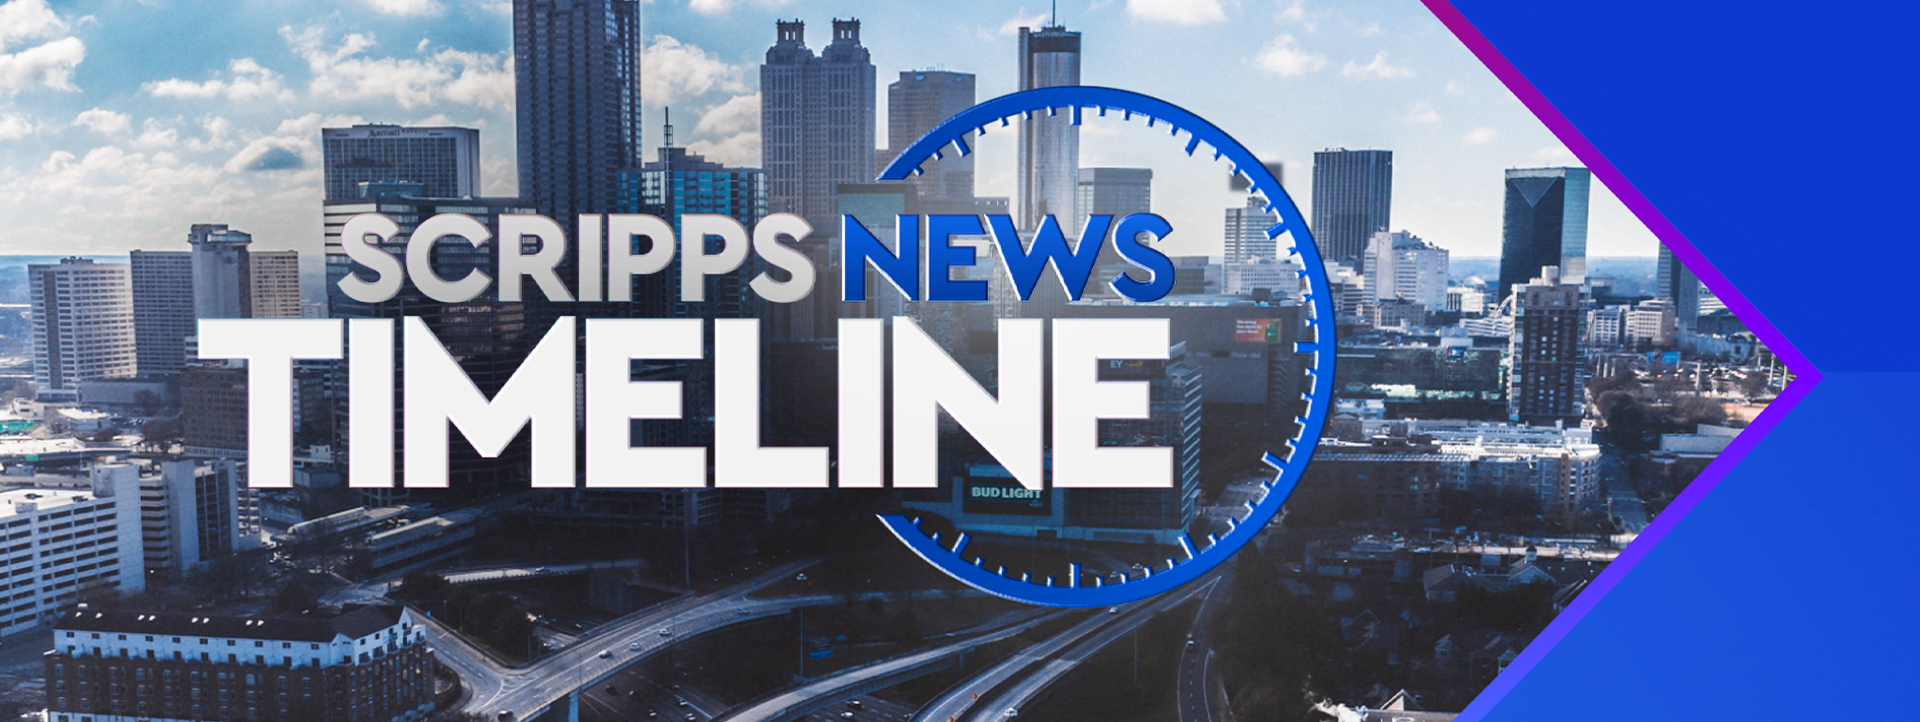 Scripps News Timeline logo